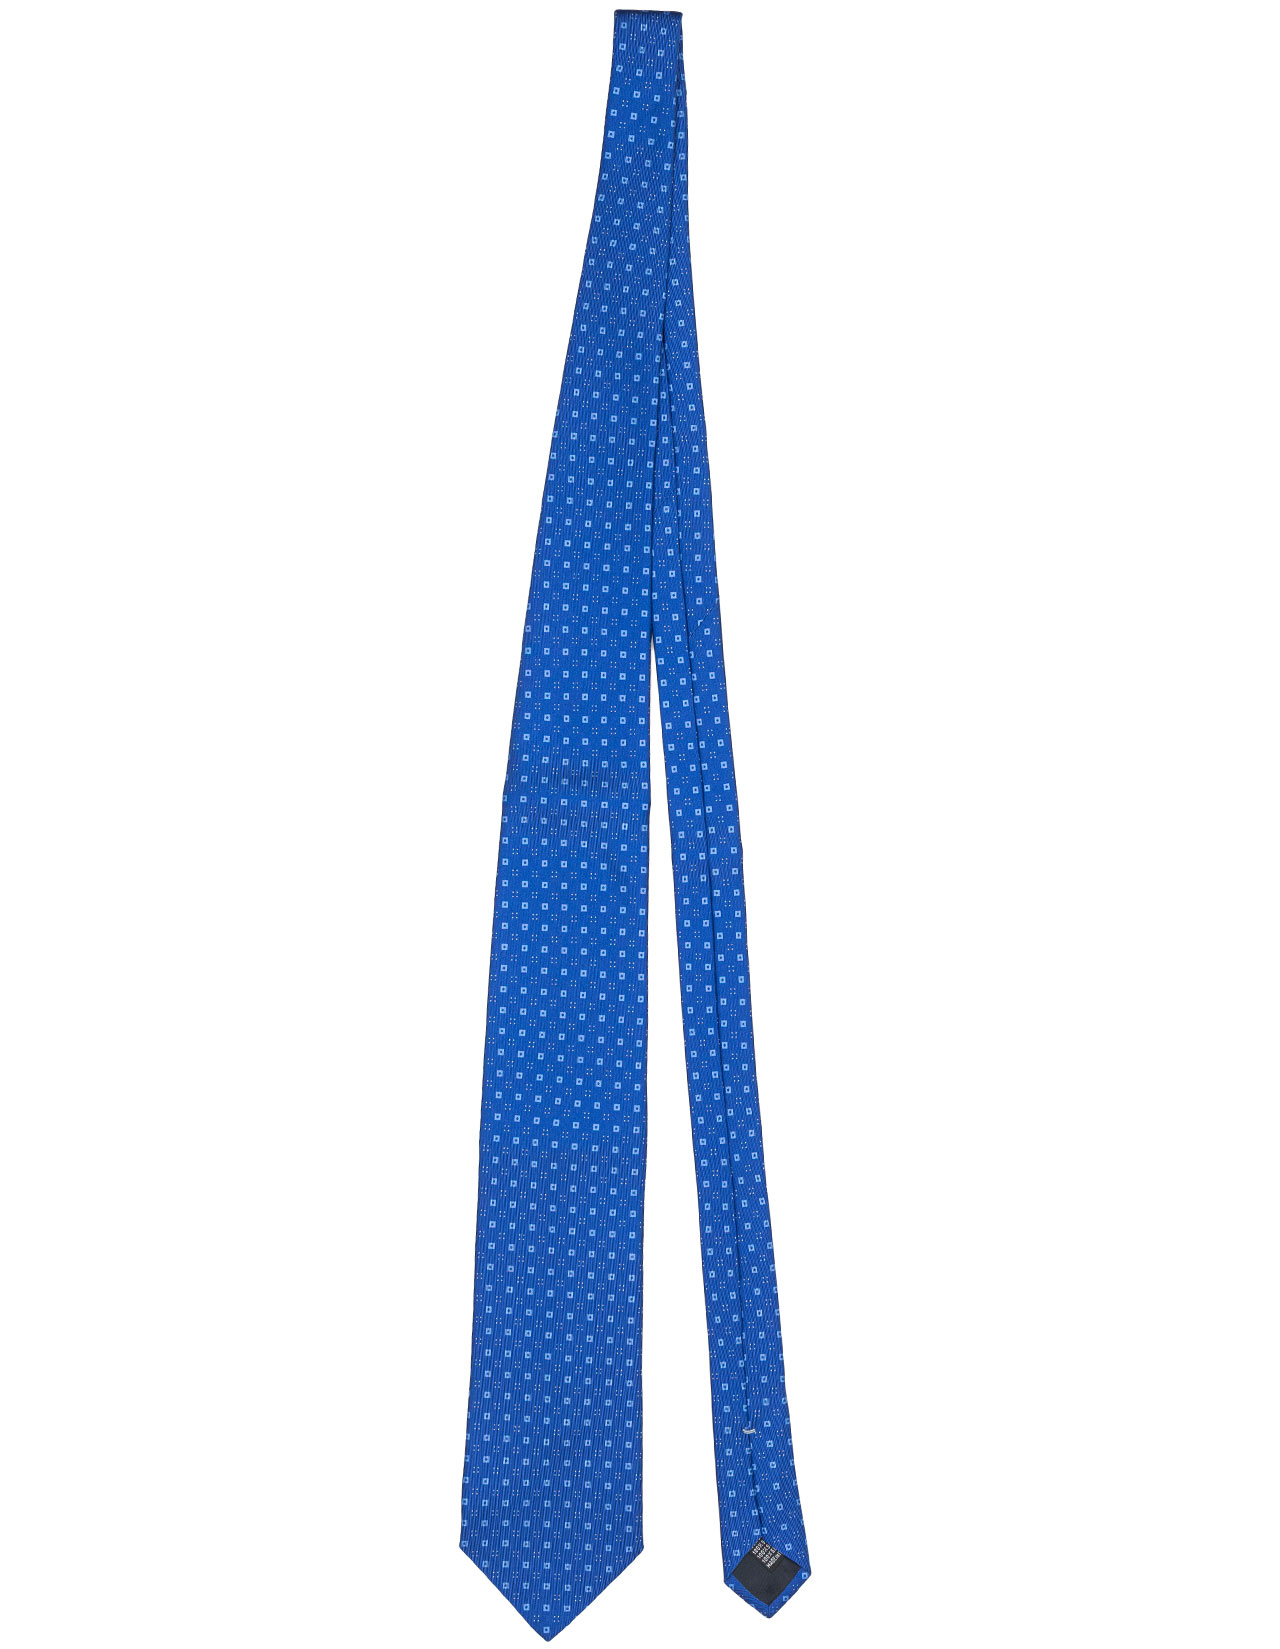 Cesare Attolini Krawatte in blau mit hellblauen Quadraten